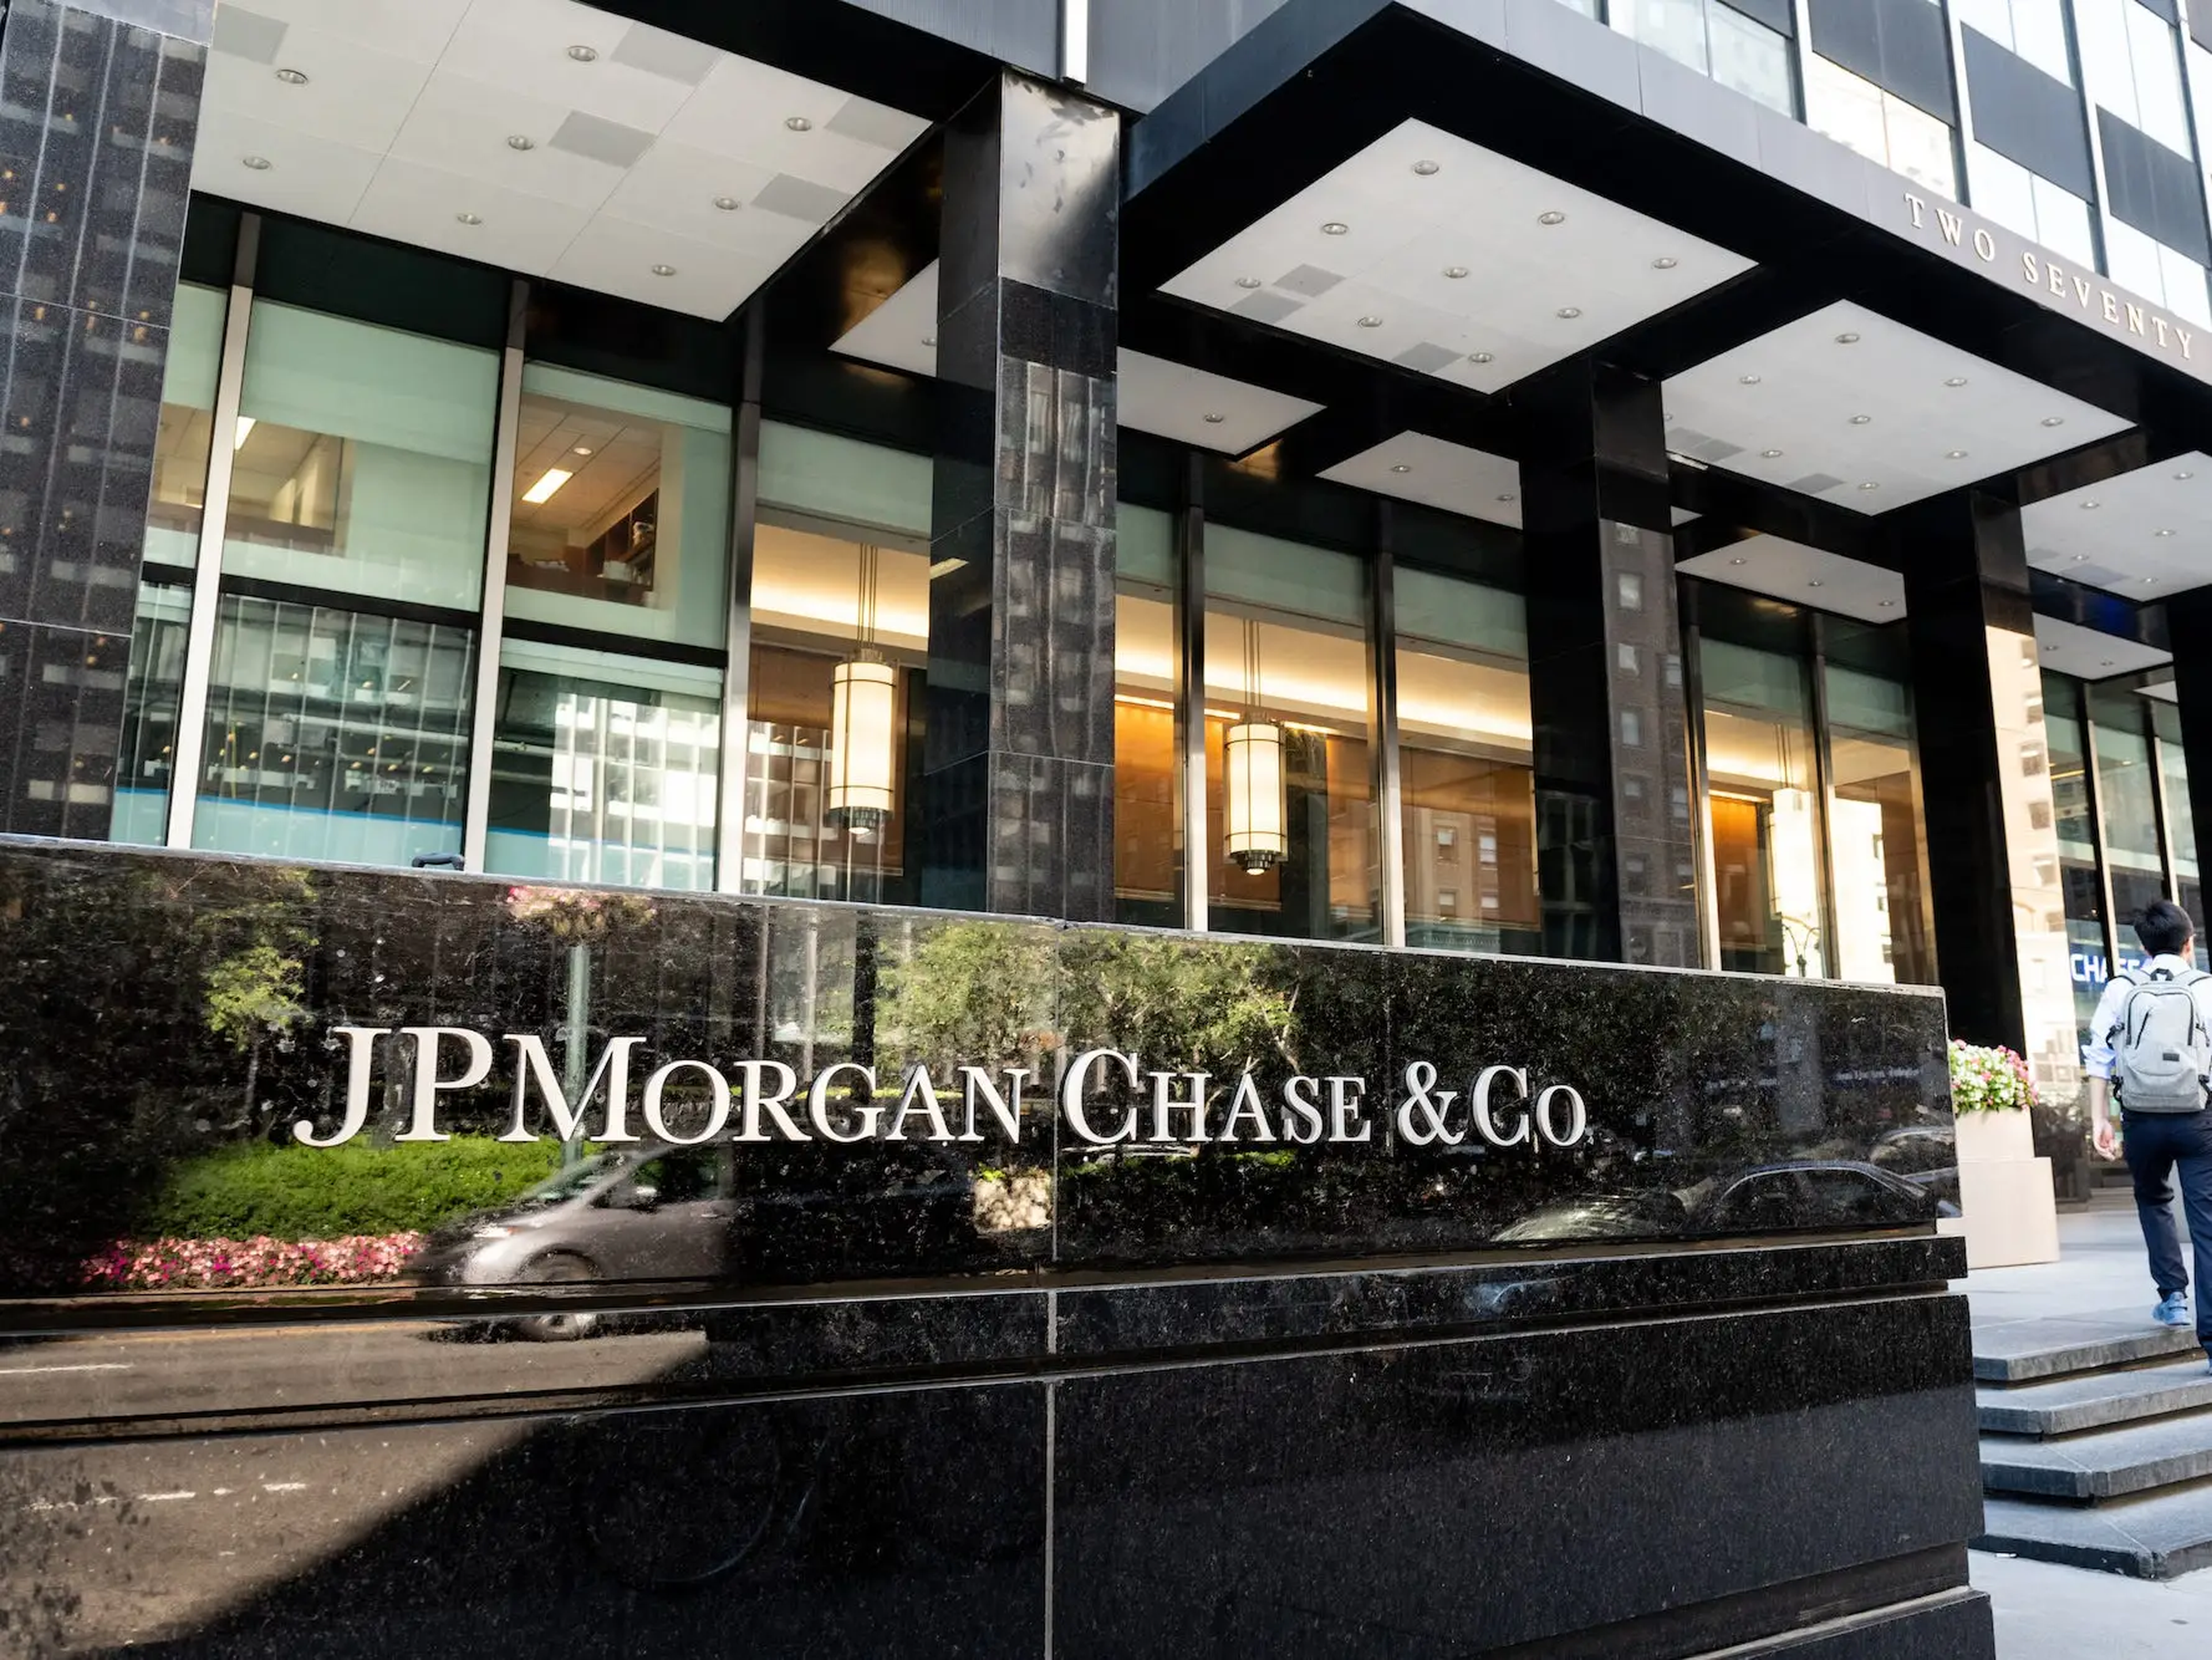 JPMorgan.